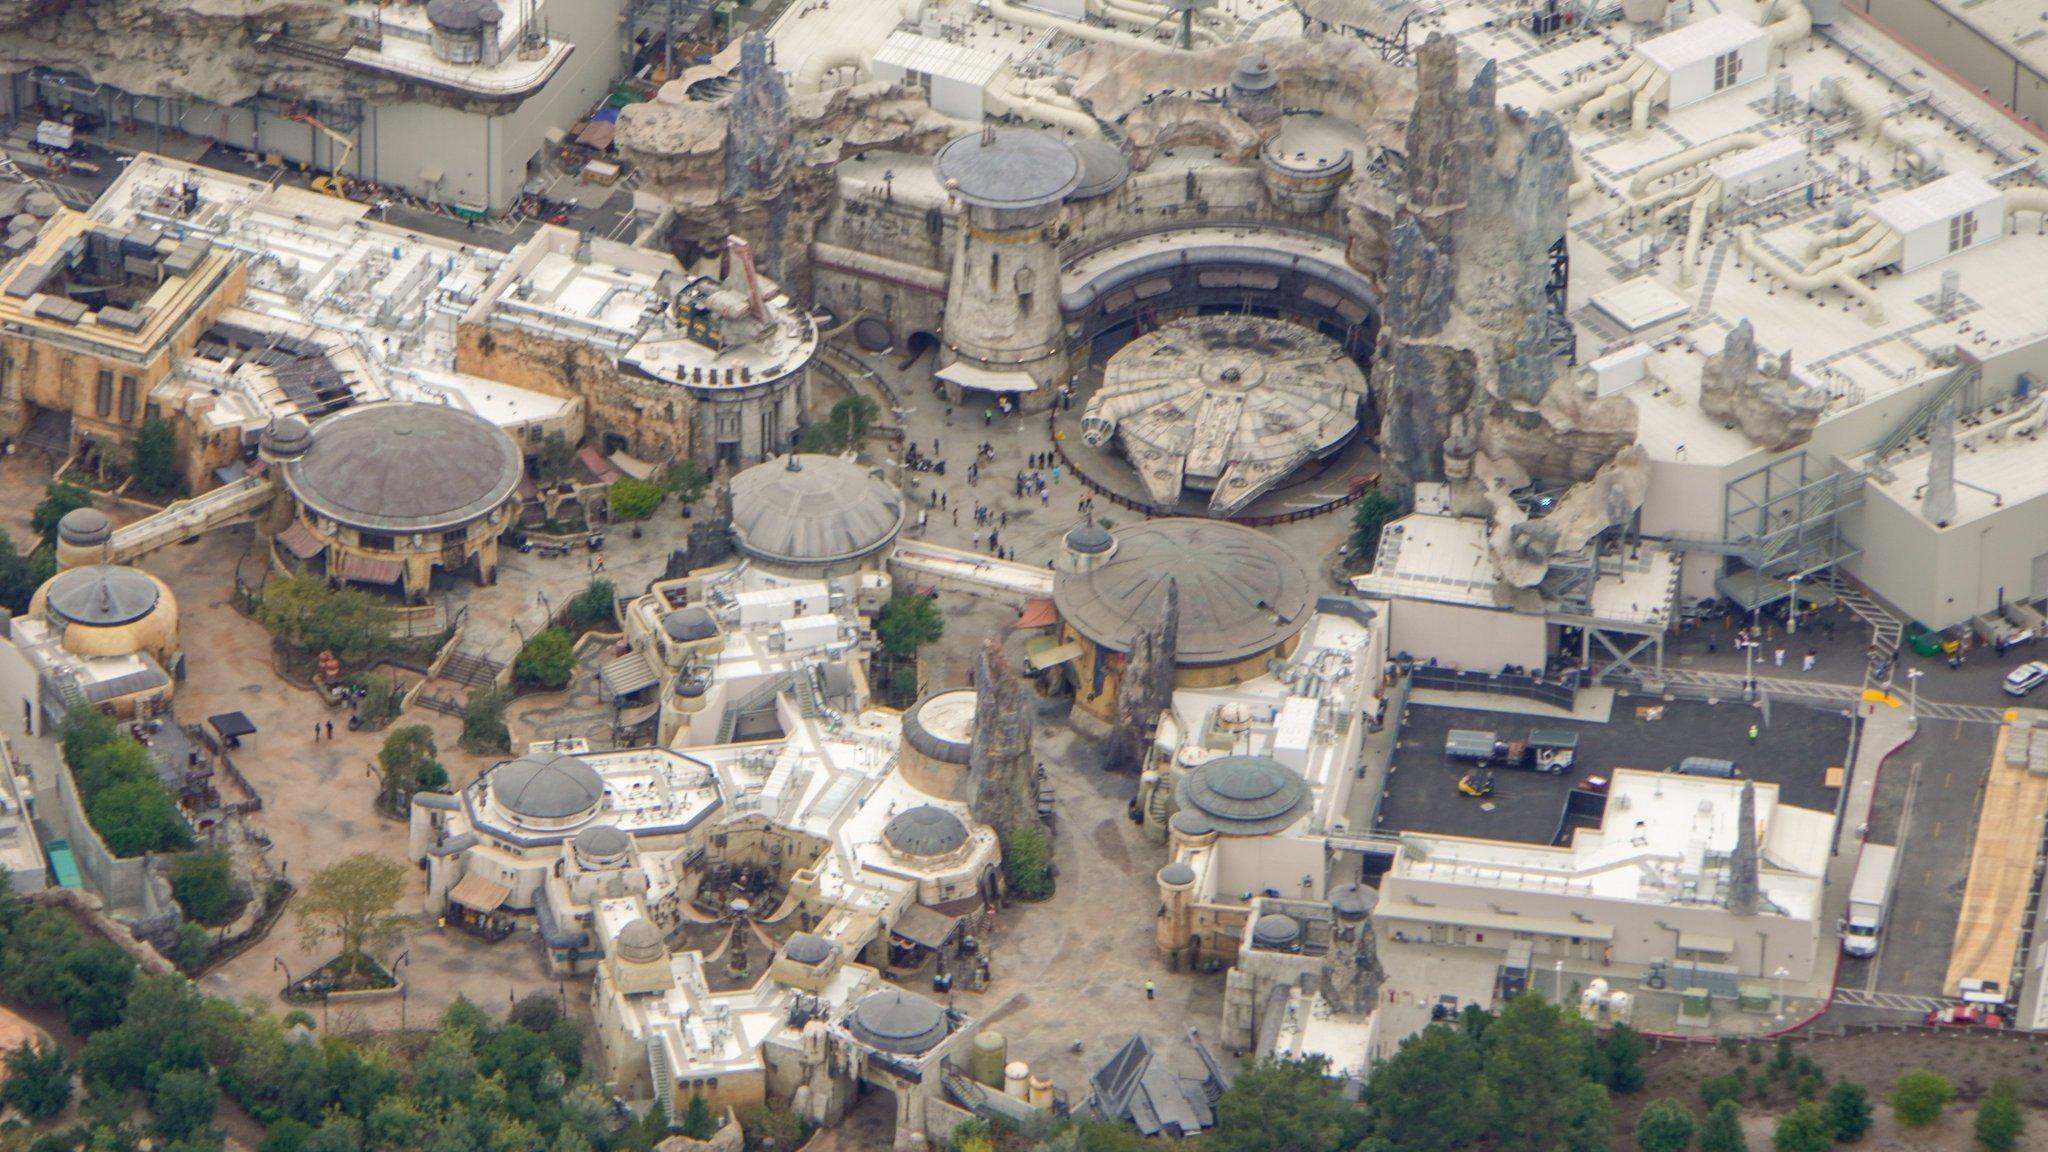 Aerial view of Star Wars: Galaxy's Edge at Disneyland. It